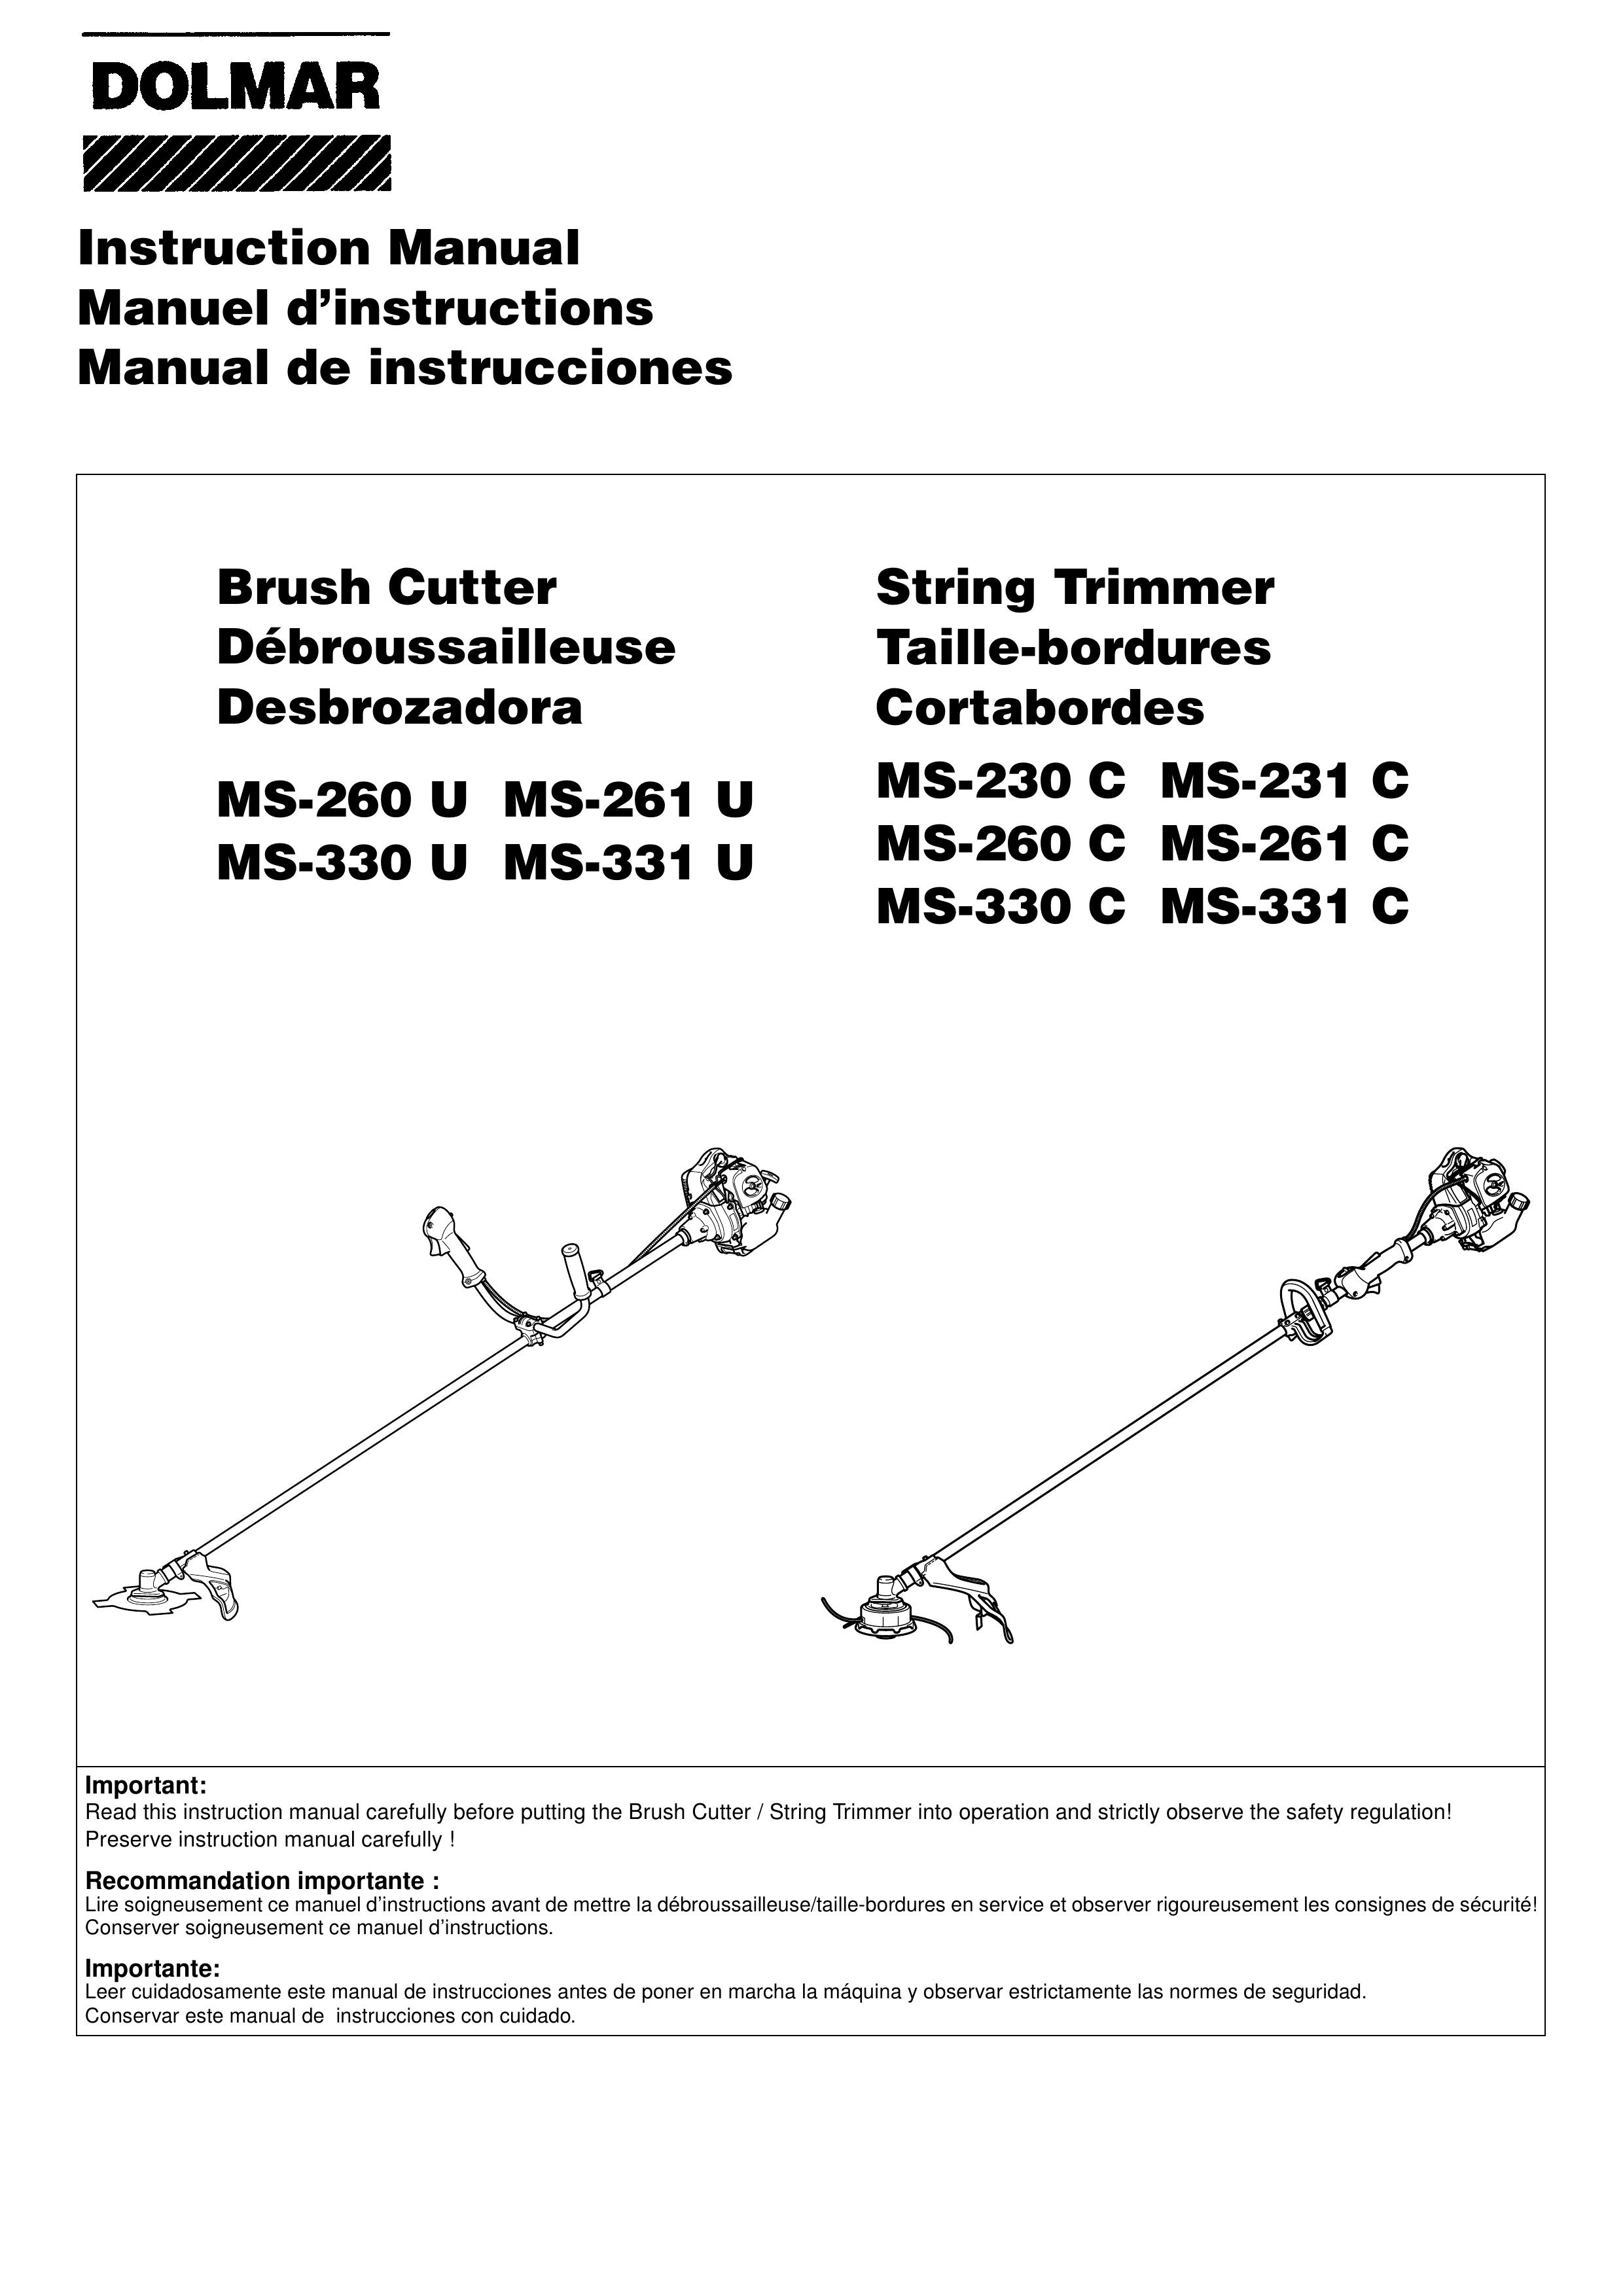 Dolmar MS-331 C Brush Cutter User Manual